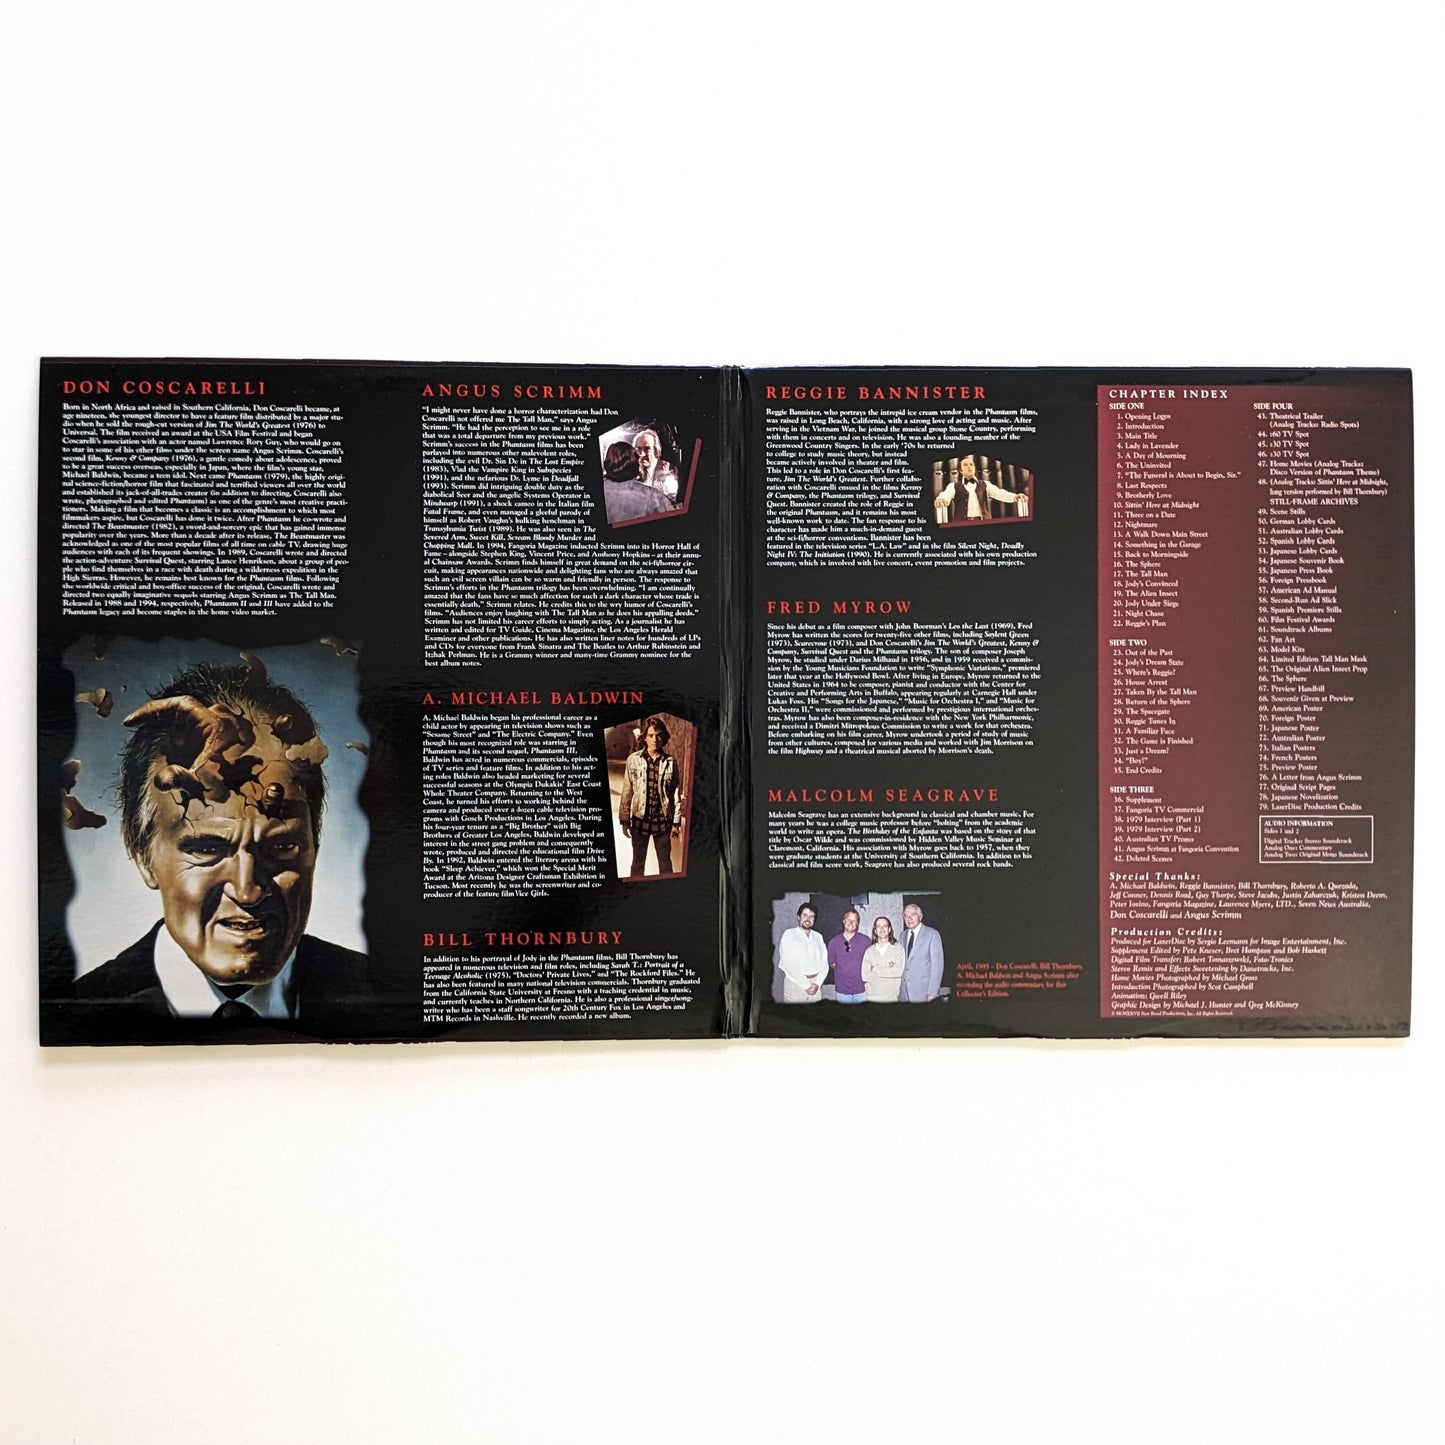 Phantasm signed box set (1979) North American Laserdisc